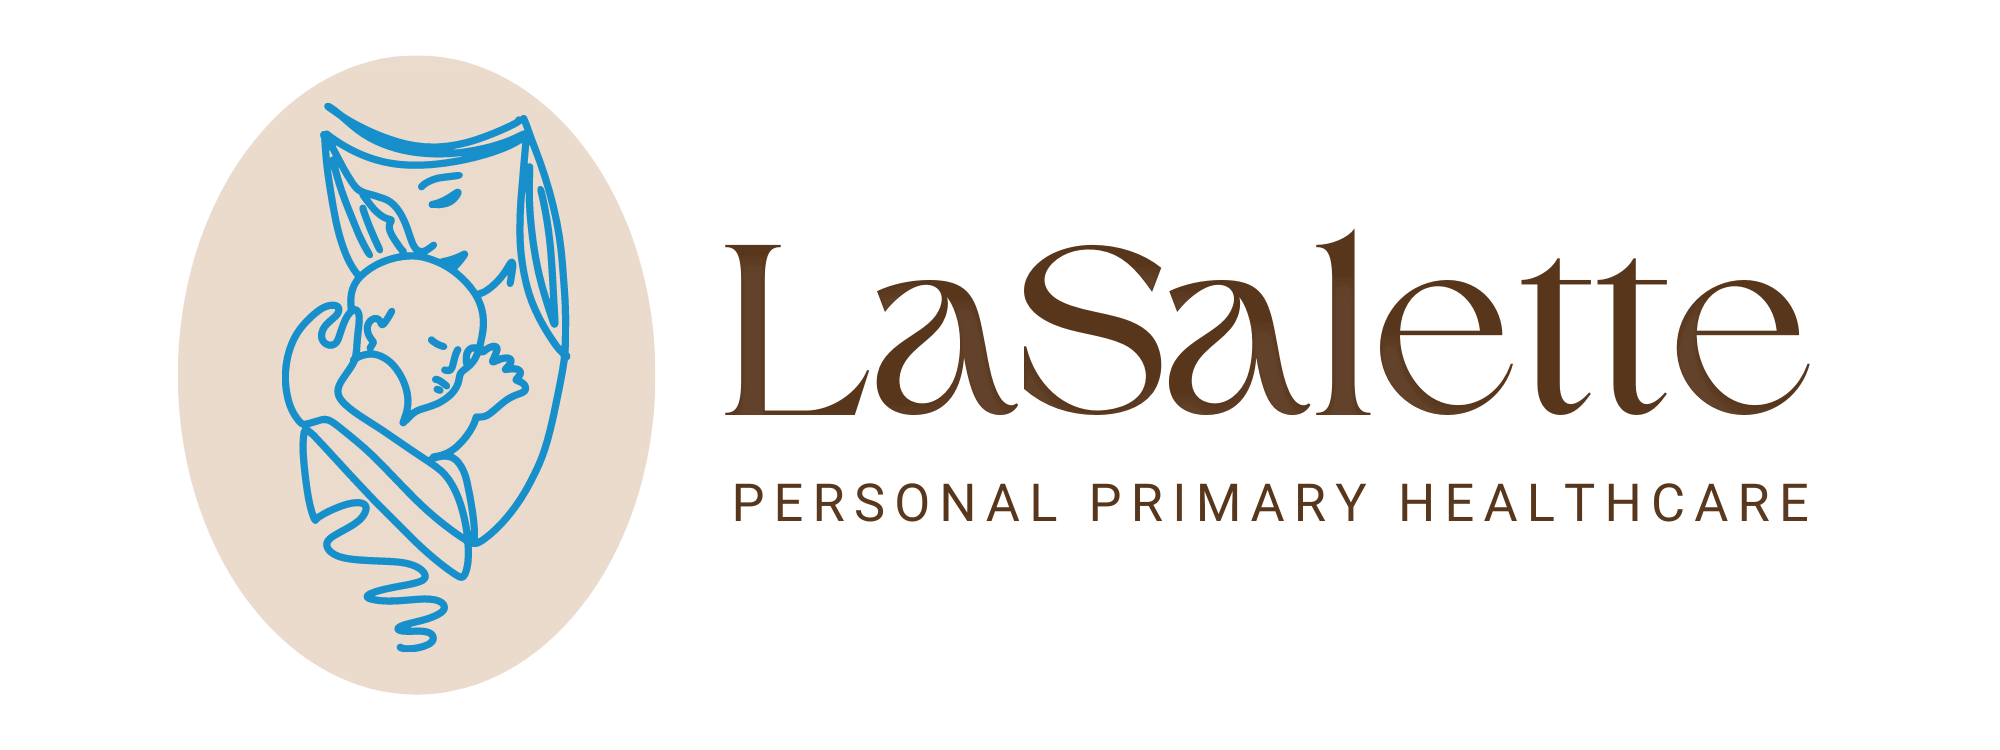 LaSalette PPH Logo